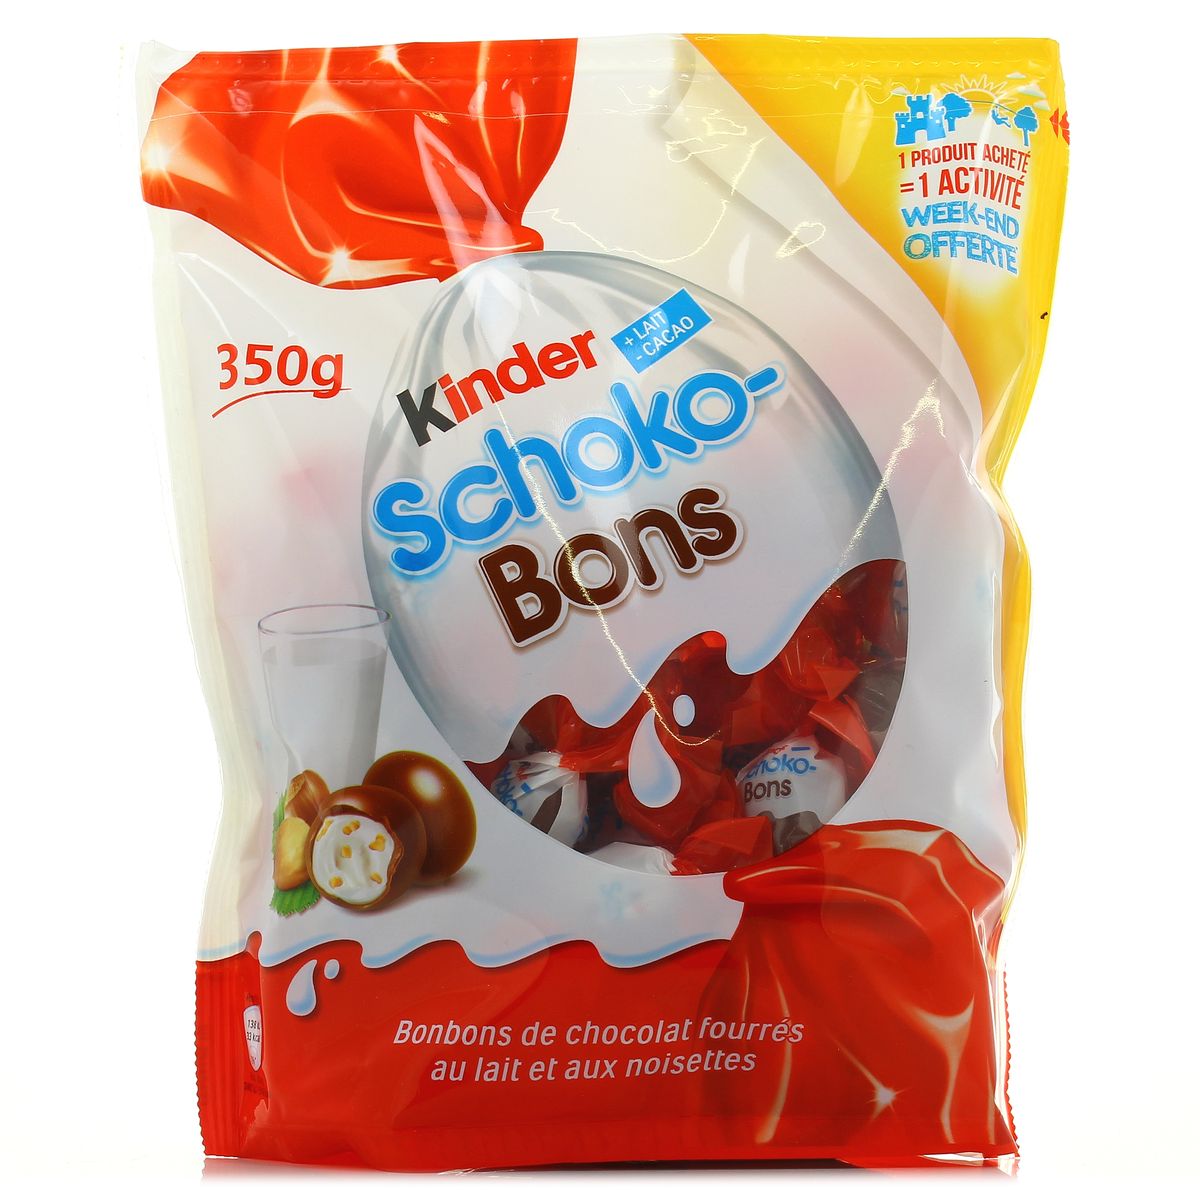 Kinder Schoko-Bons - Pensée Gourmande 